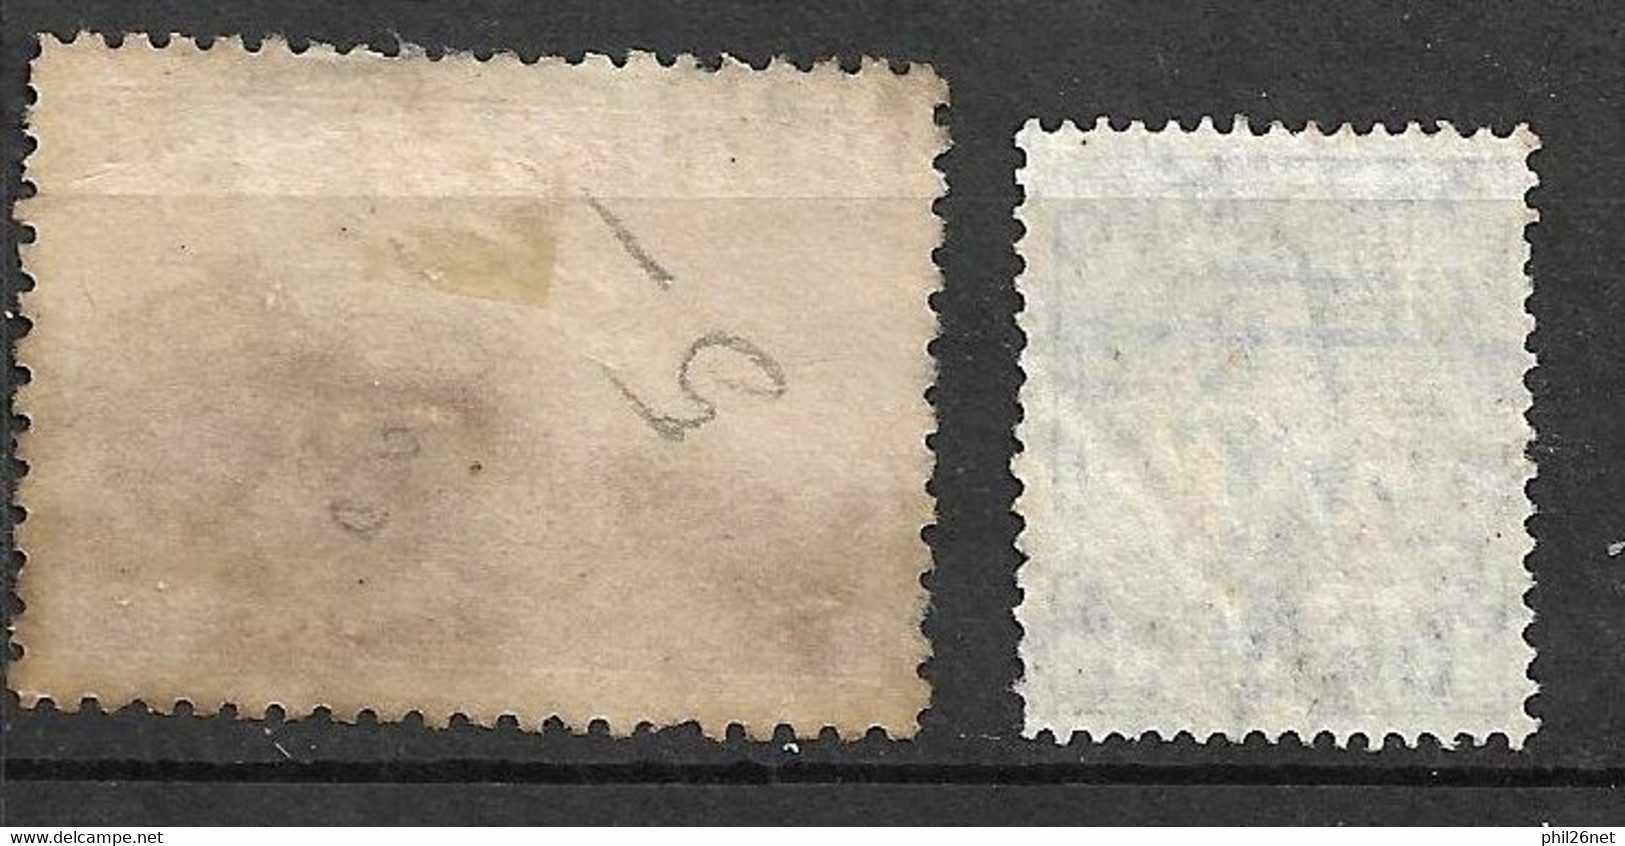 Australie UK  N° 88 Et 89      Oblitérés   B/TB       - Used Stamps